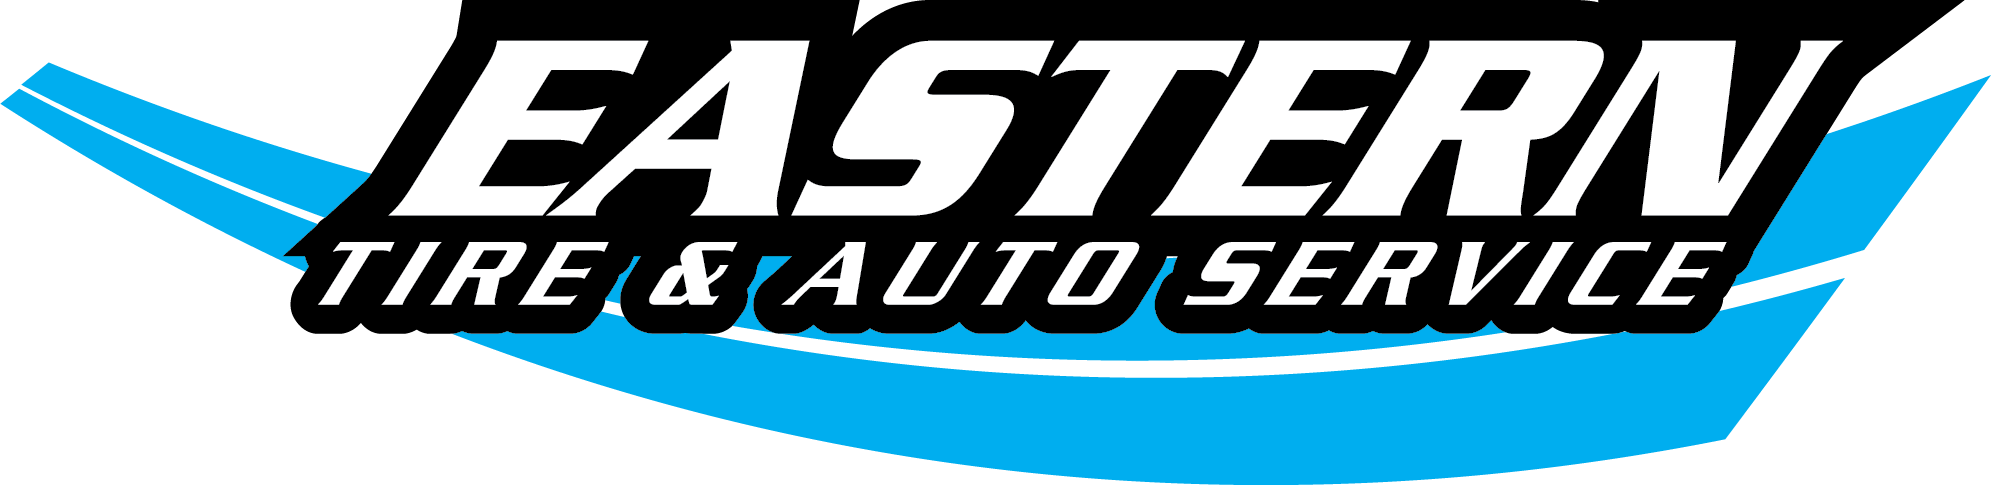 Eastern Tire Service Inc